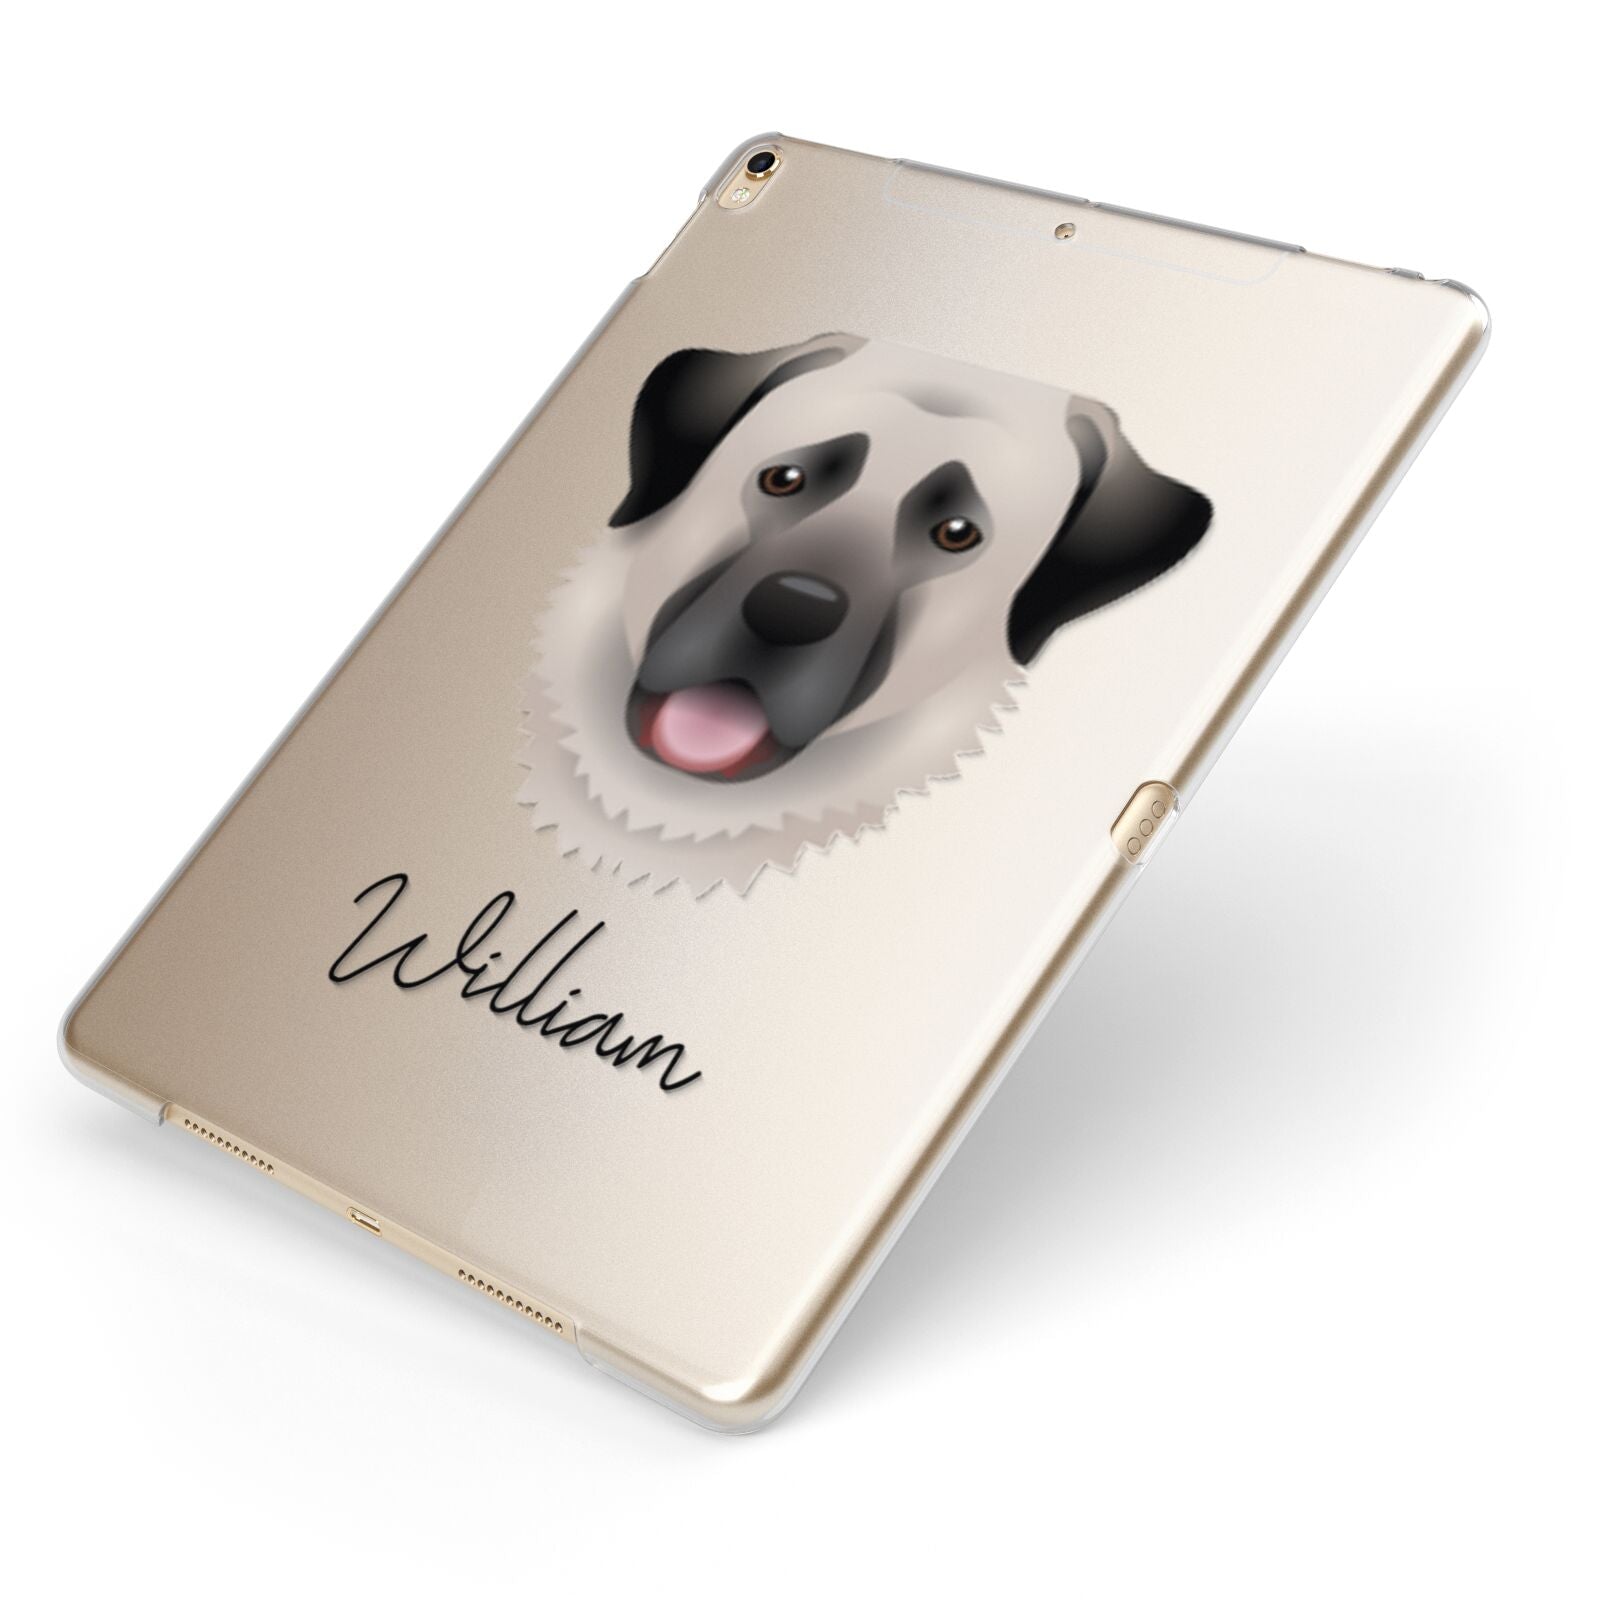 Anatolian Shepherd Dog Personalised Apple iPad Case on Gold iPad Side View